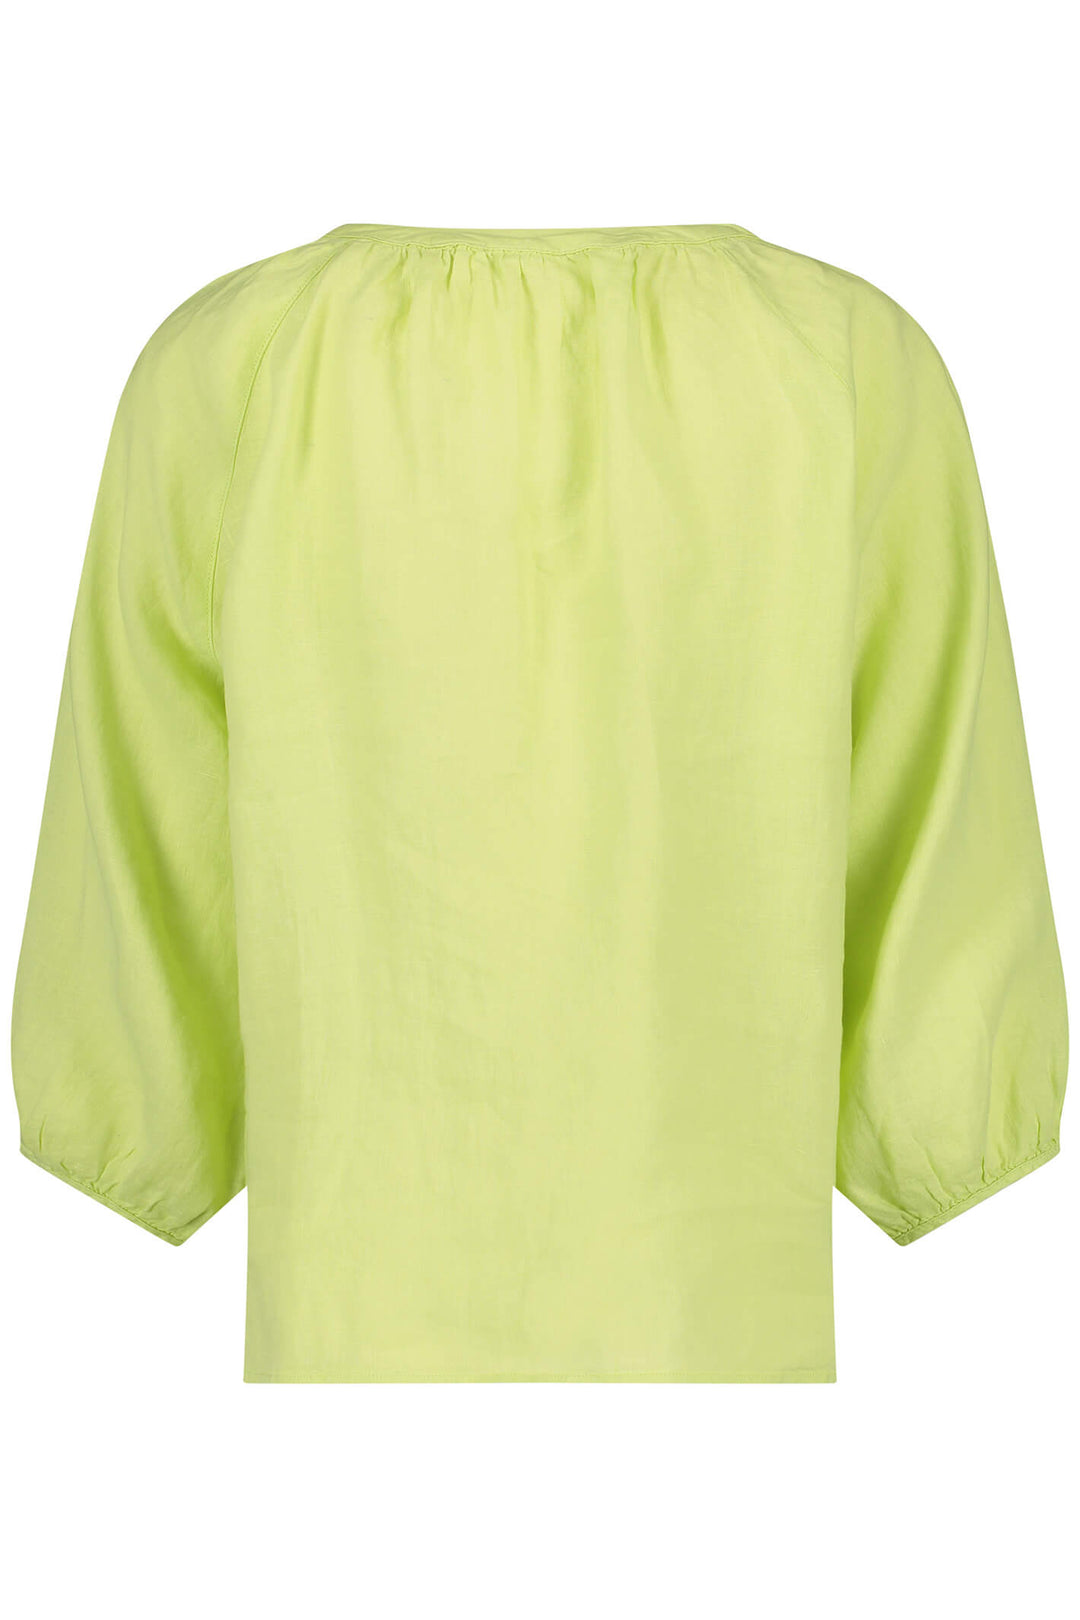 Gerry Weber 860053 Light Lime Green Linen Blouse - Experience Boutique